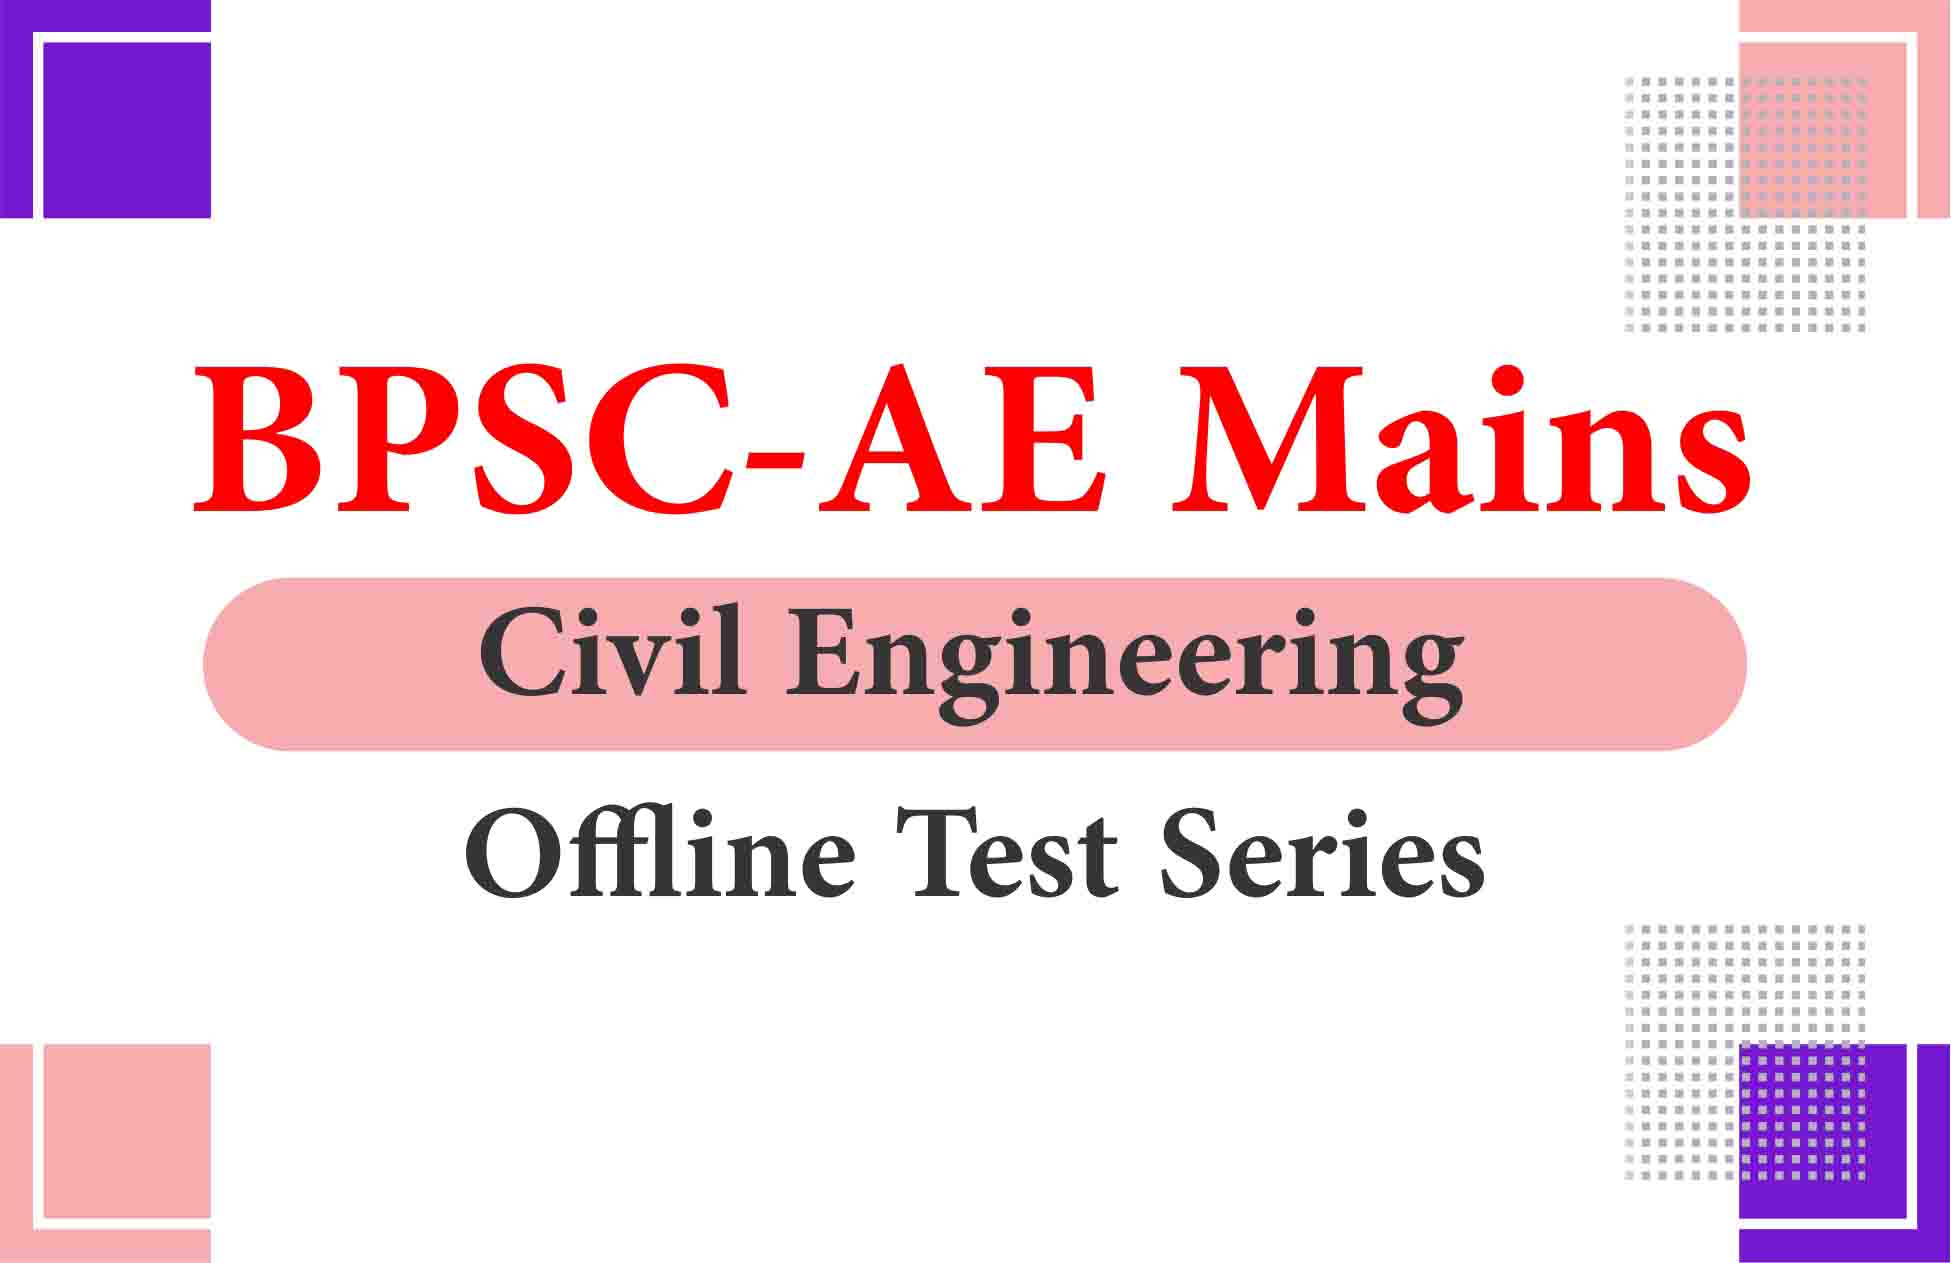 BPSC-AE Mains Civil Engineering Offline Test Series